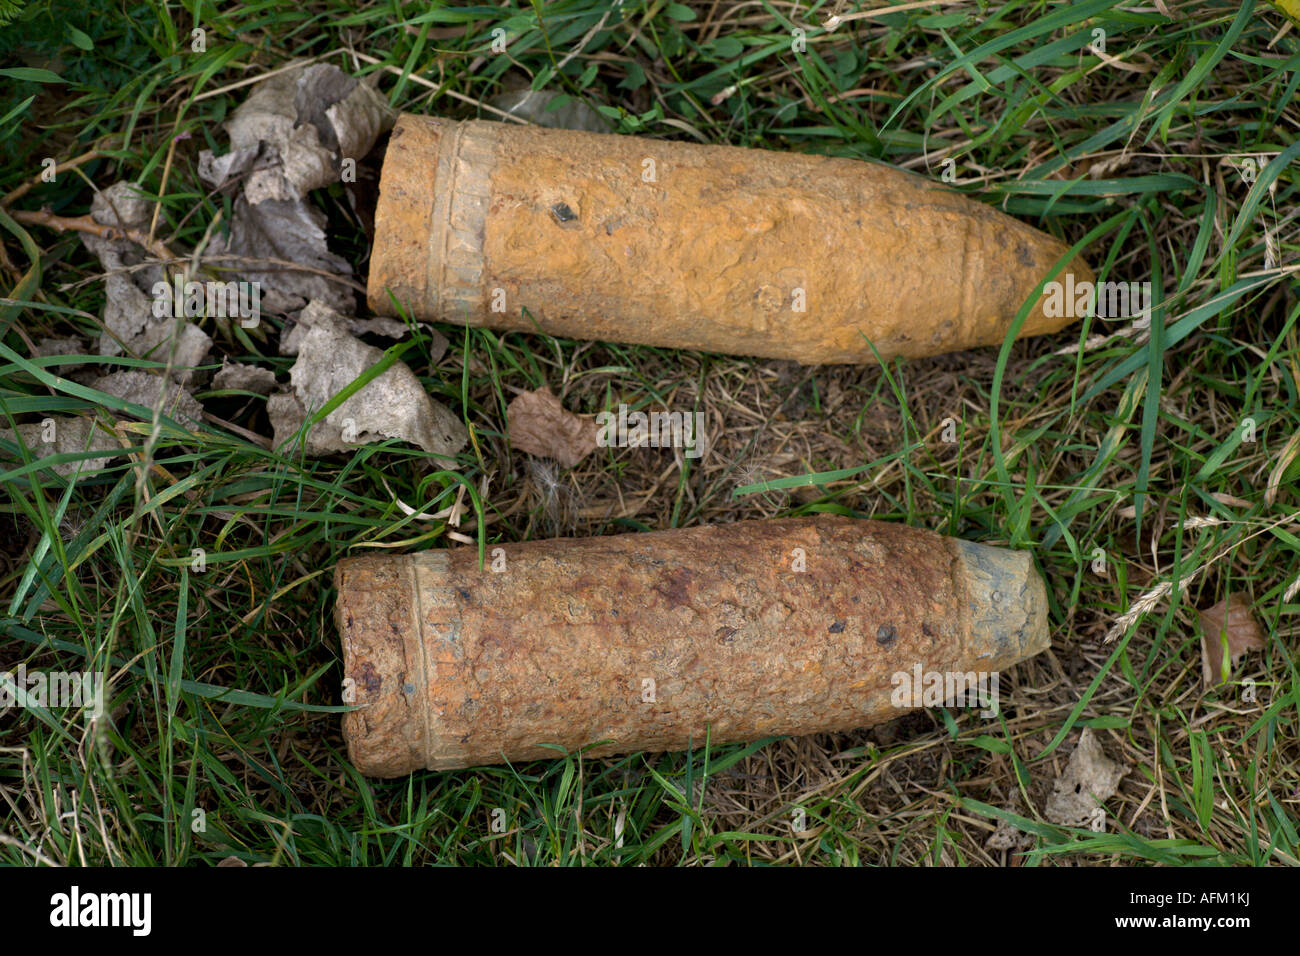 2,920 Old Bomb Shells Images, Stock Photos, 3D objects, & Vectors